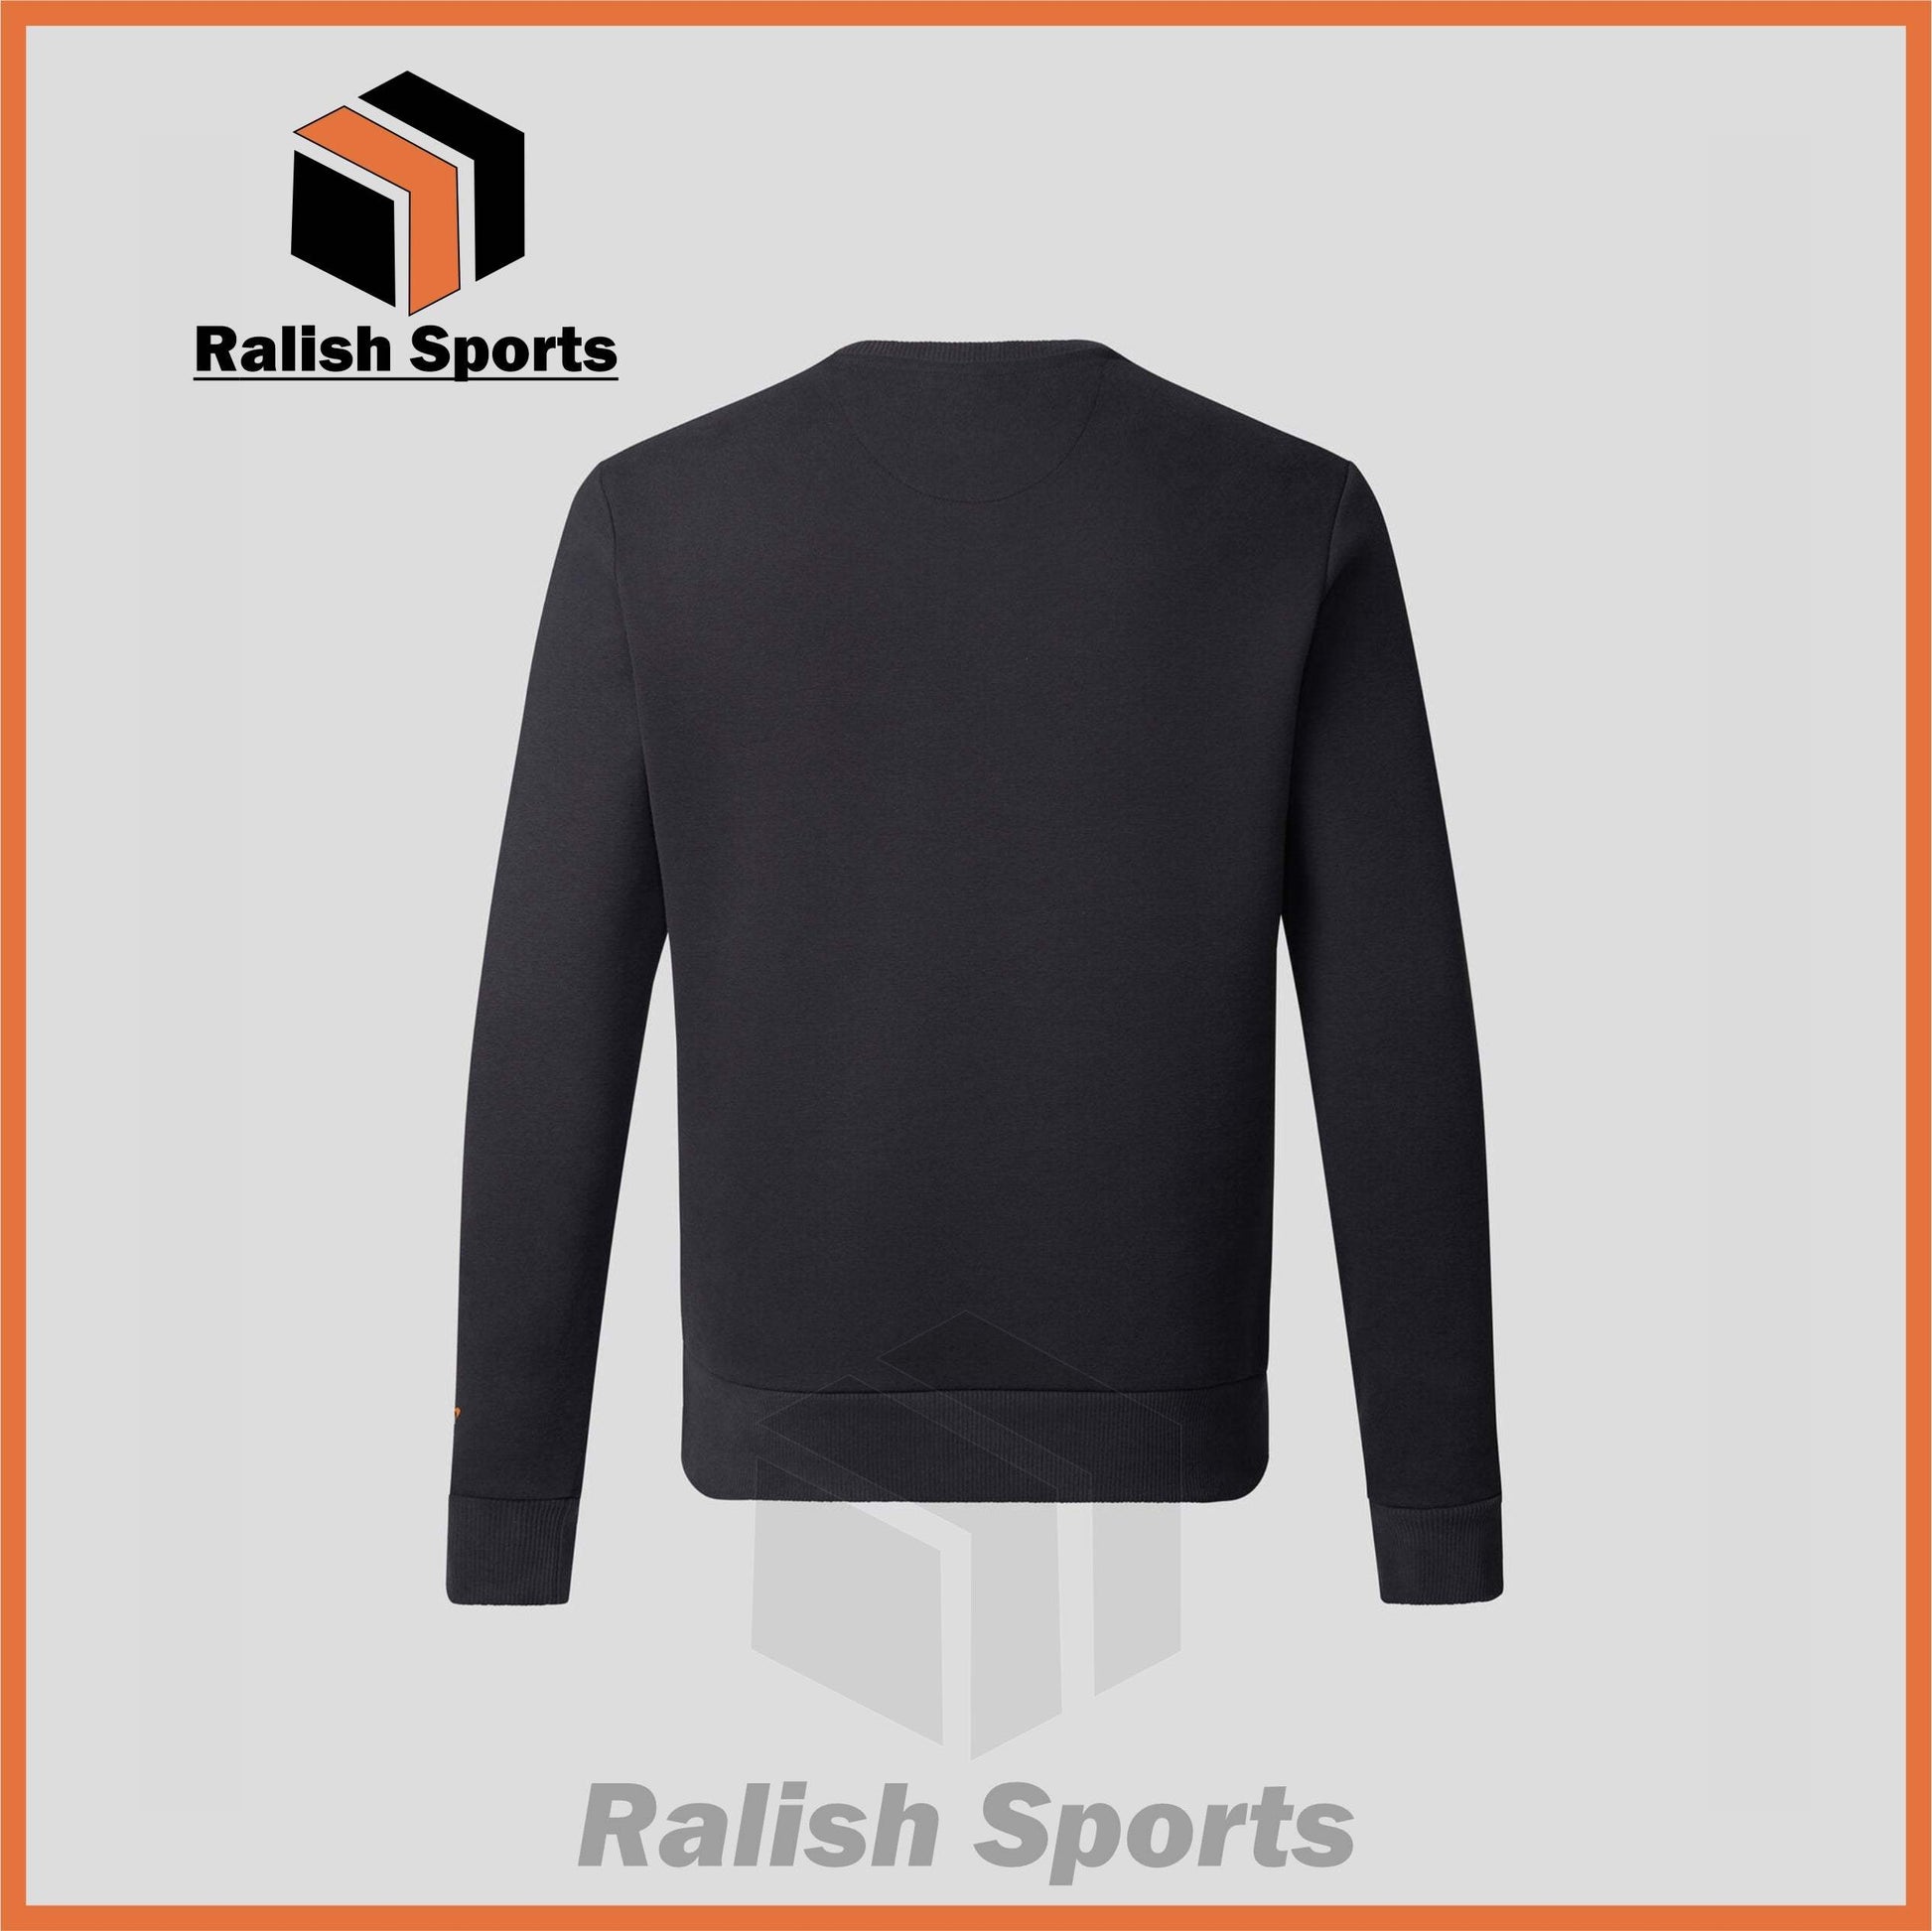 McLaren F1 Dynamic Graphic Sweatshirt - Ralish Sports